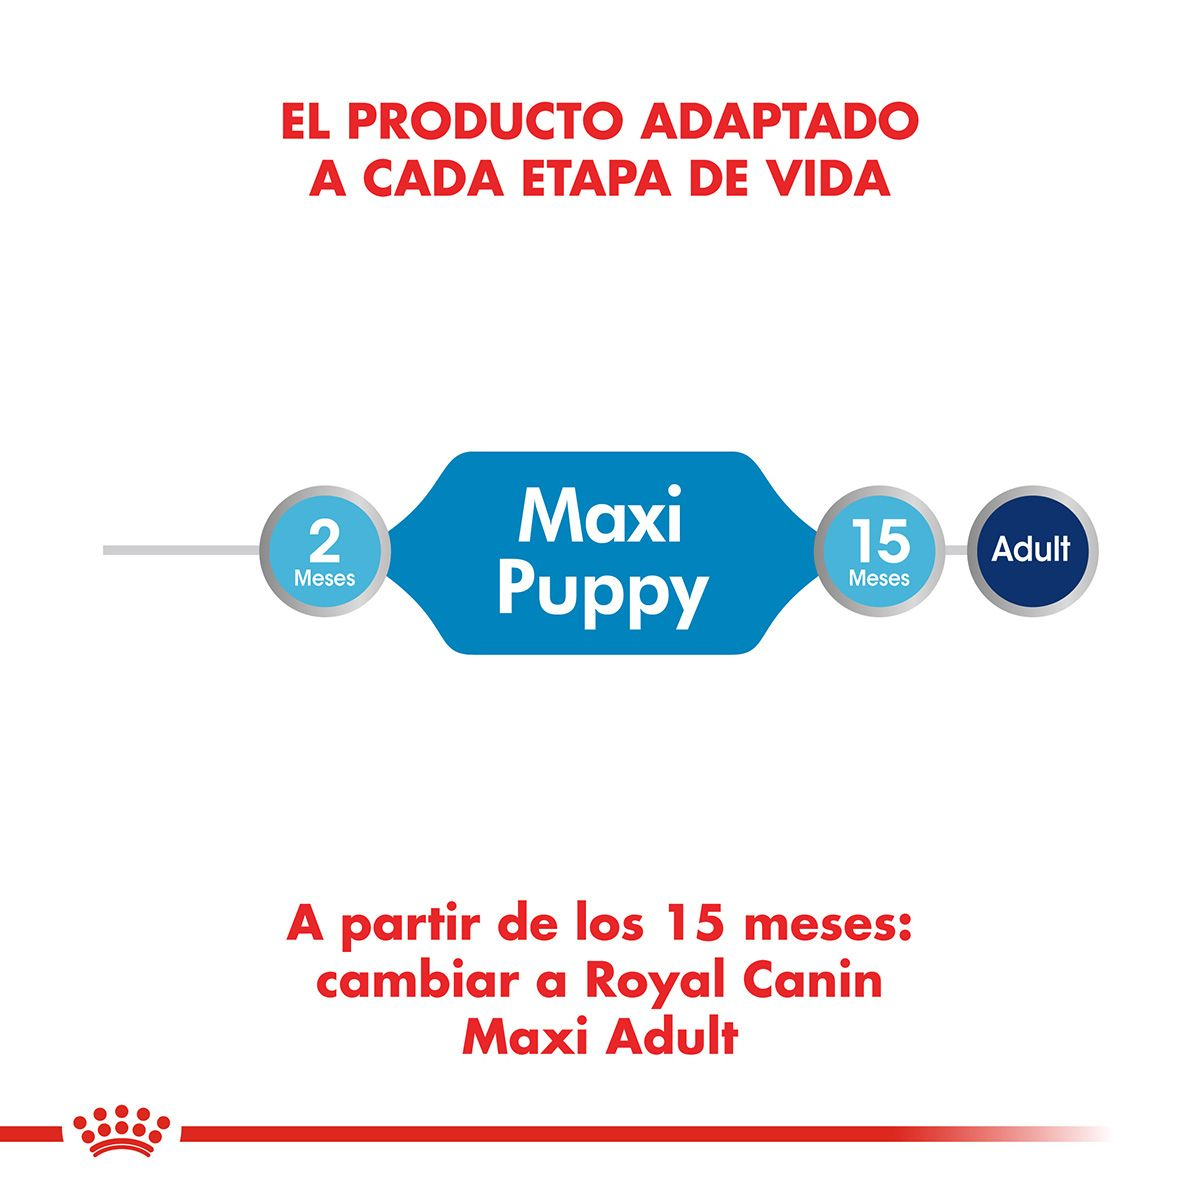 Maxi Puppy